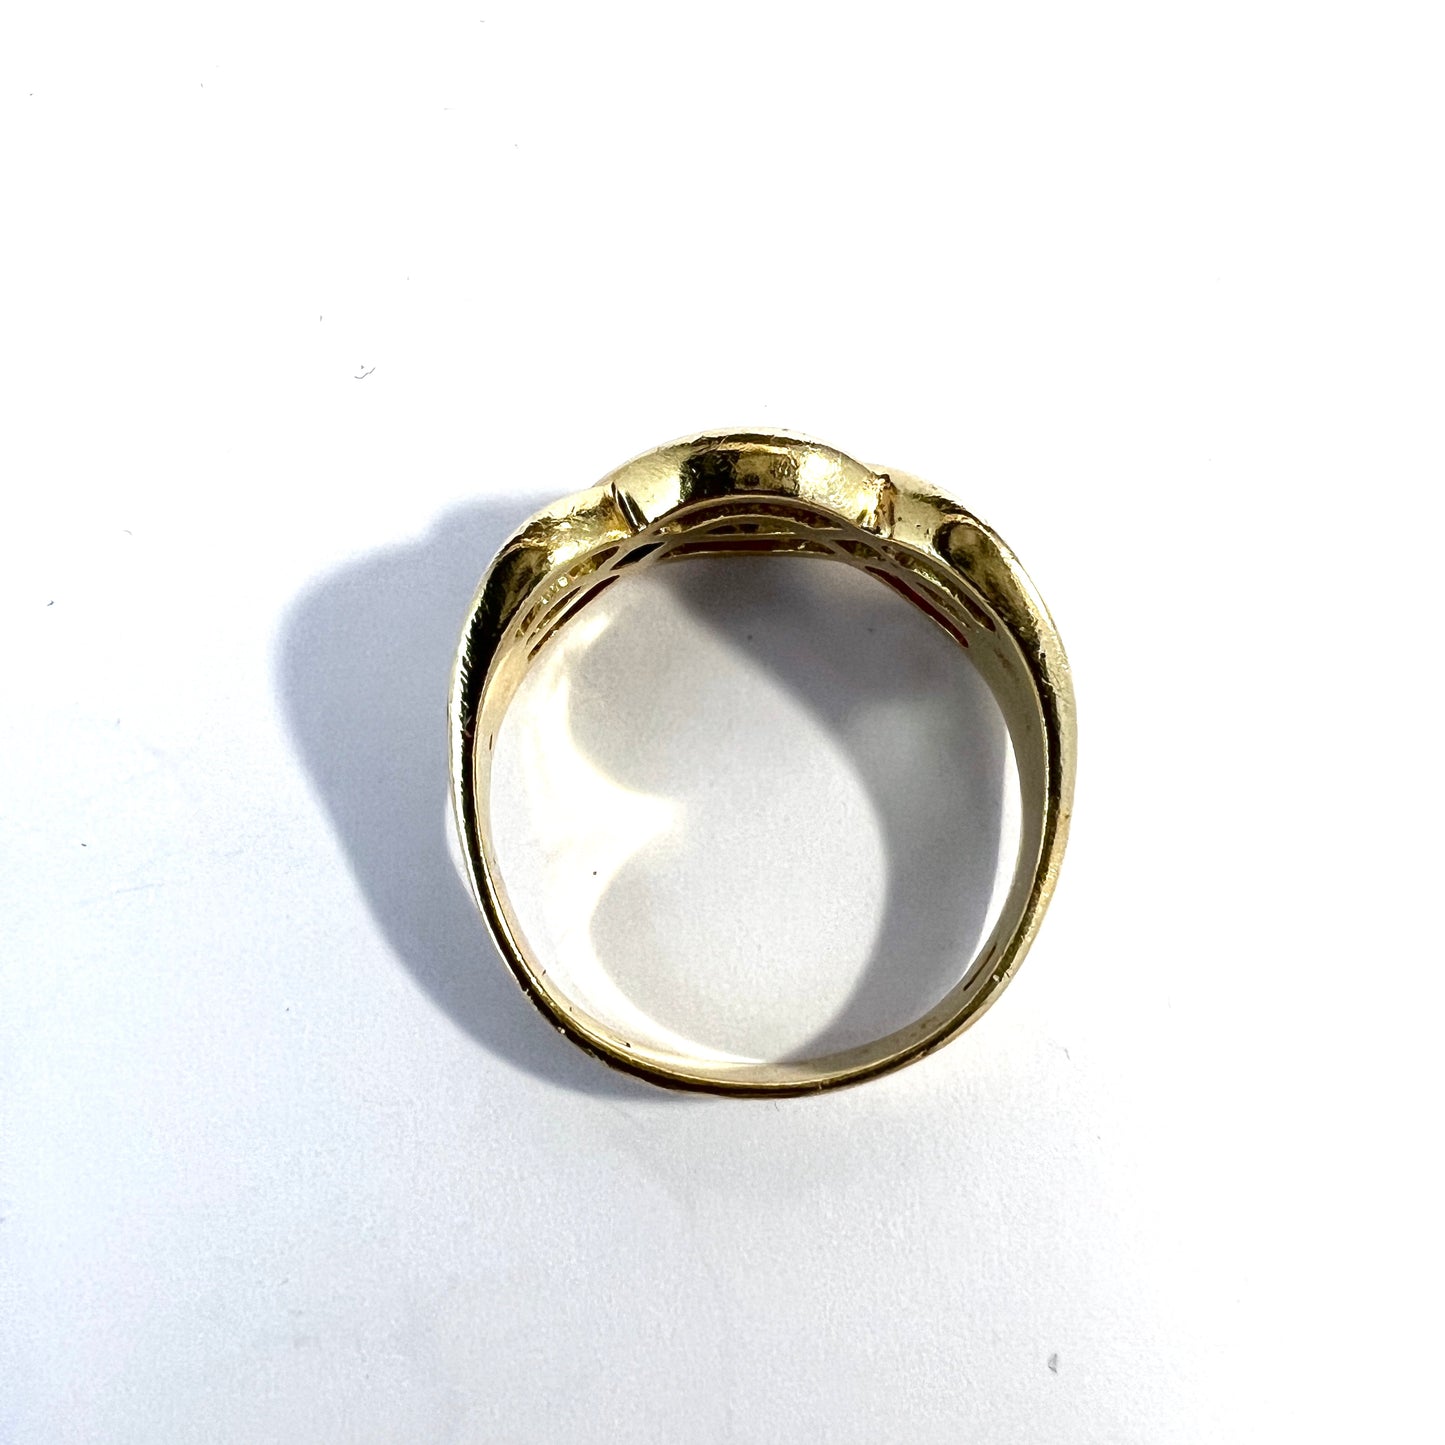 Italy c 1960s. Vintage 18k Gold Diamond Ruby Ring.